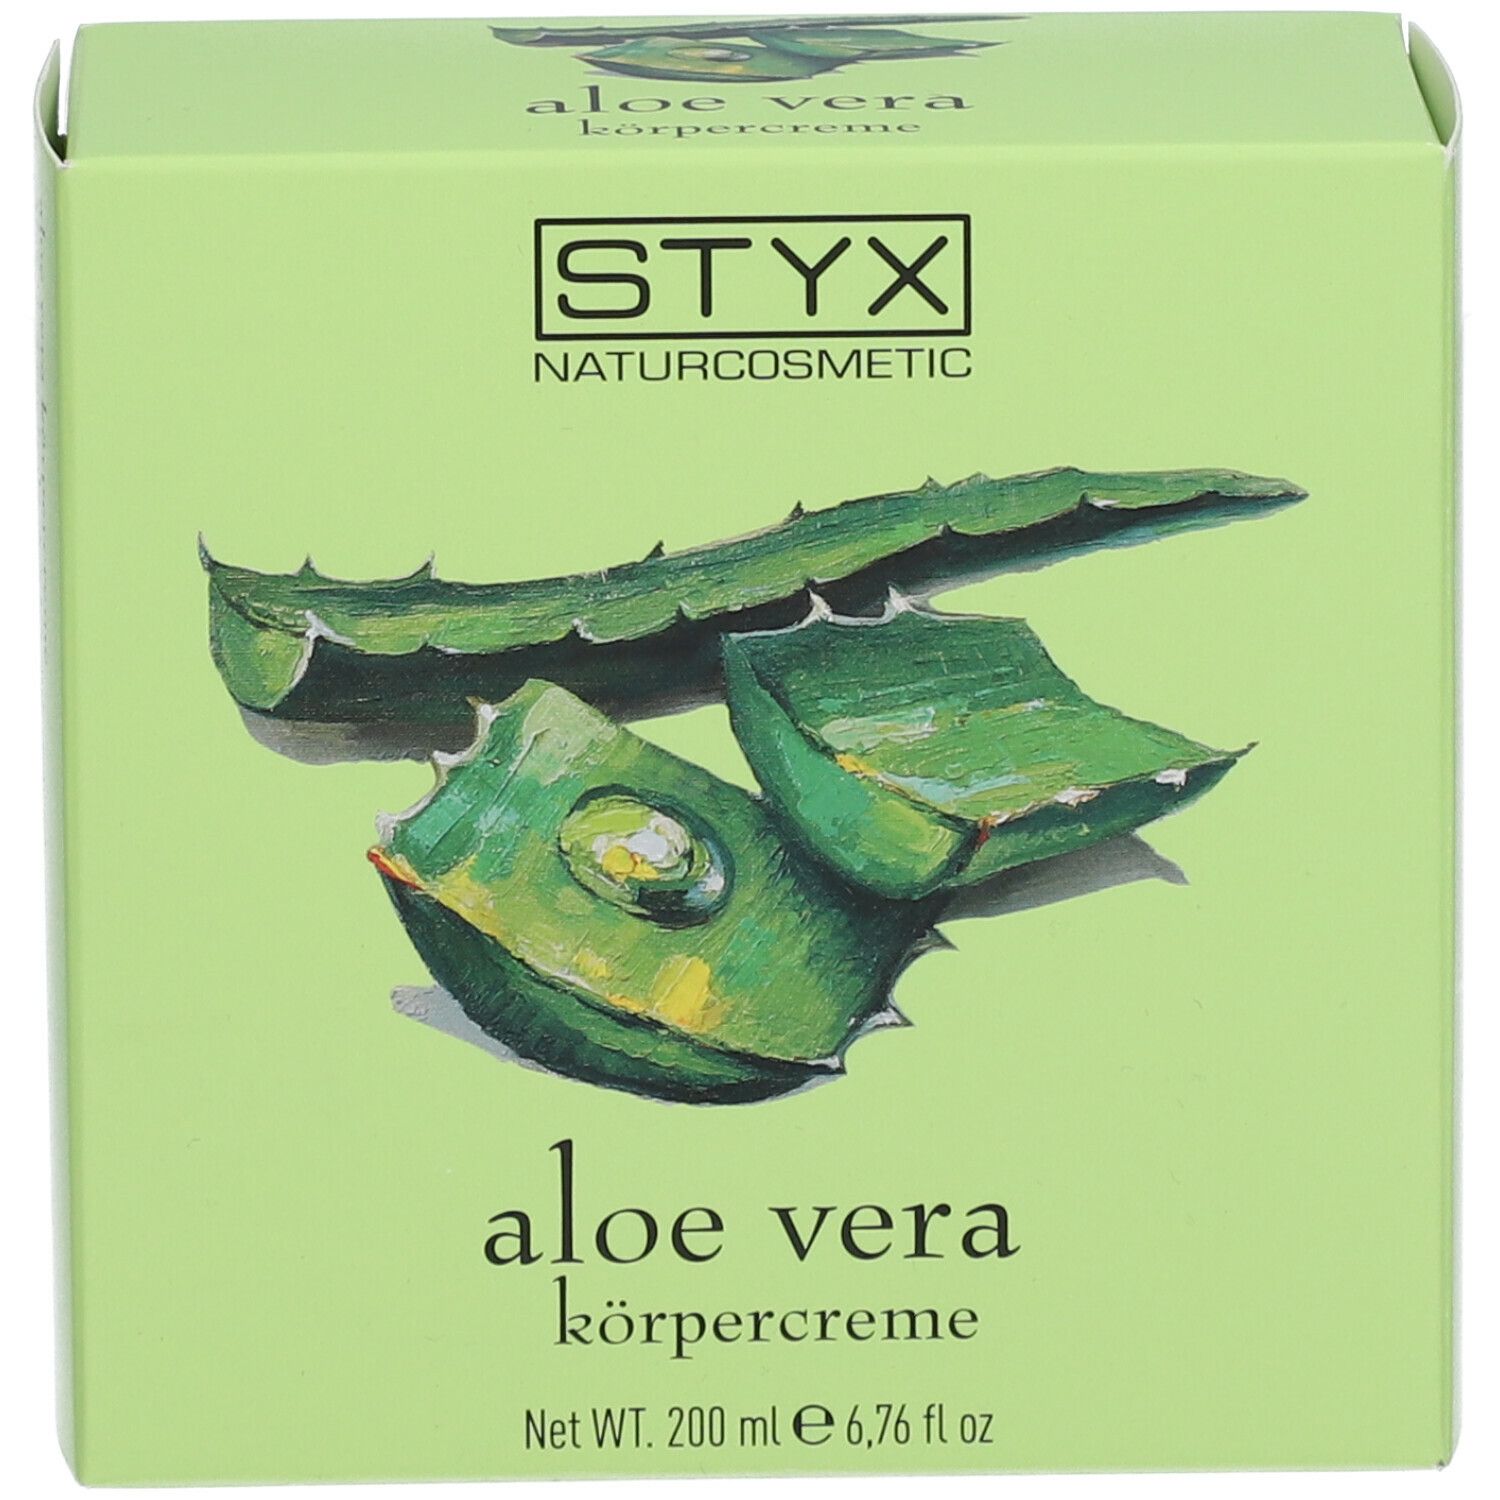 STYX Aloe Vera Körpercreme